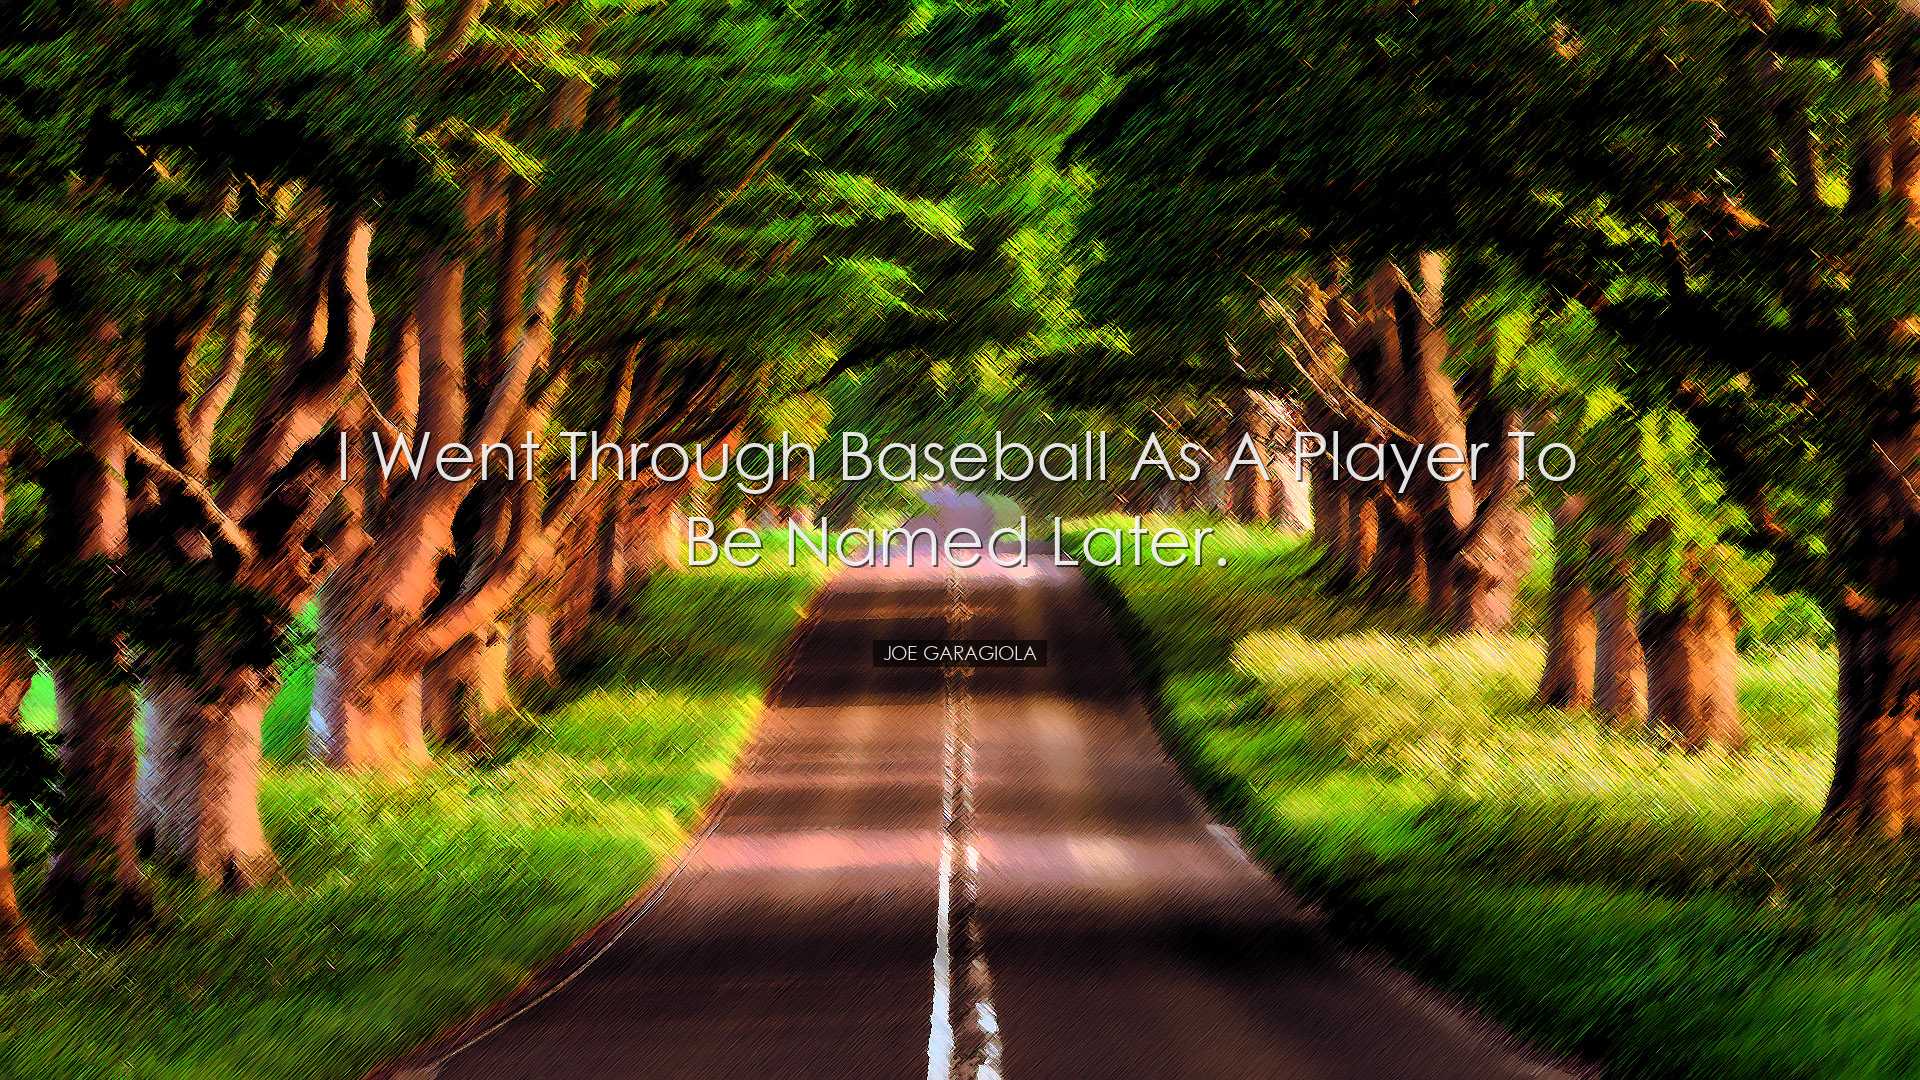 I went through baseball as a player to be named later. - Joe Garag